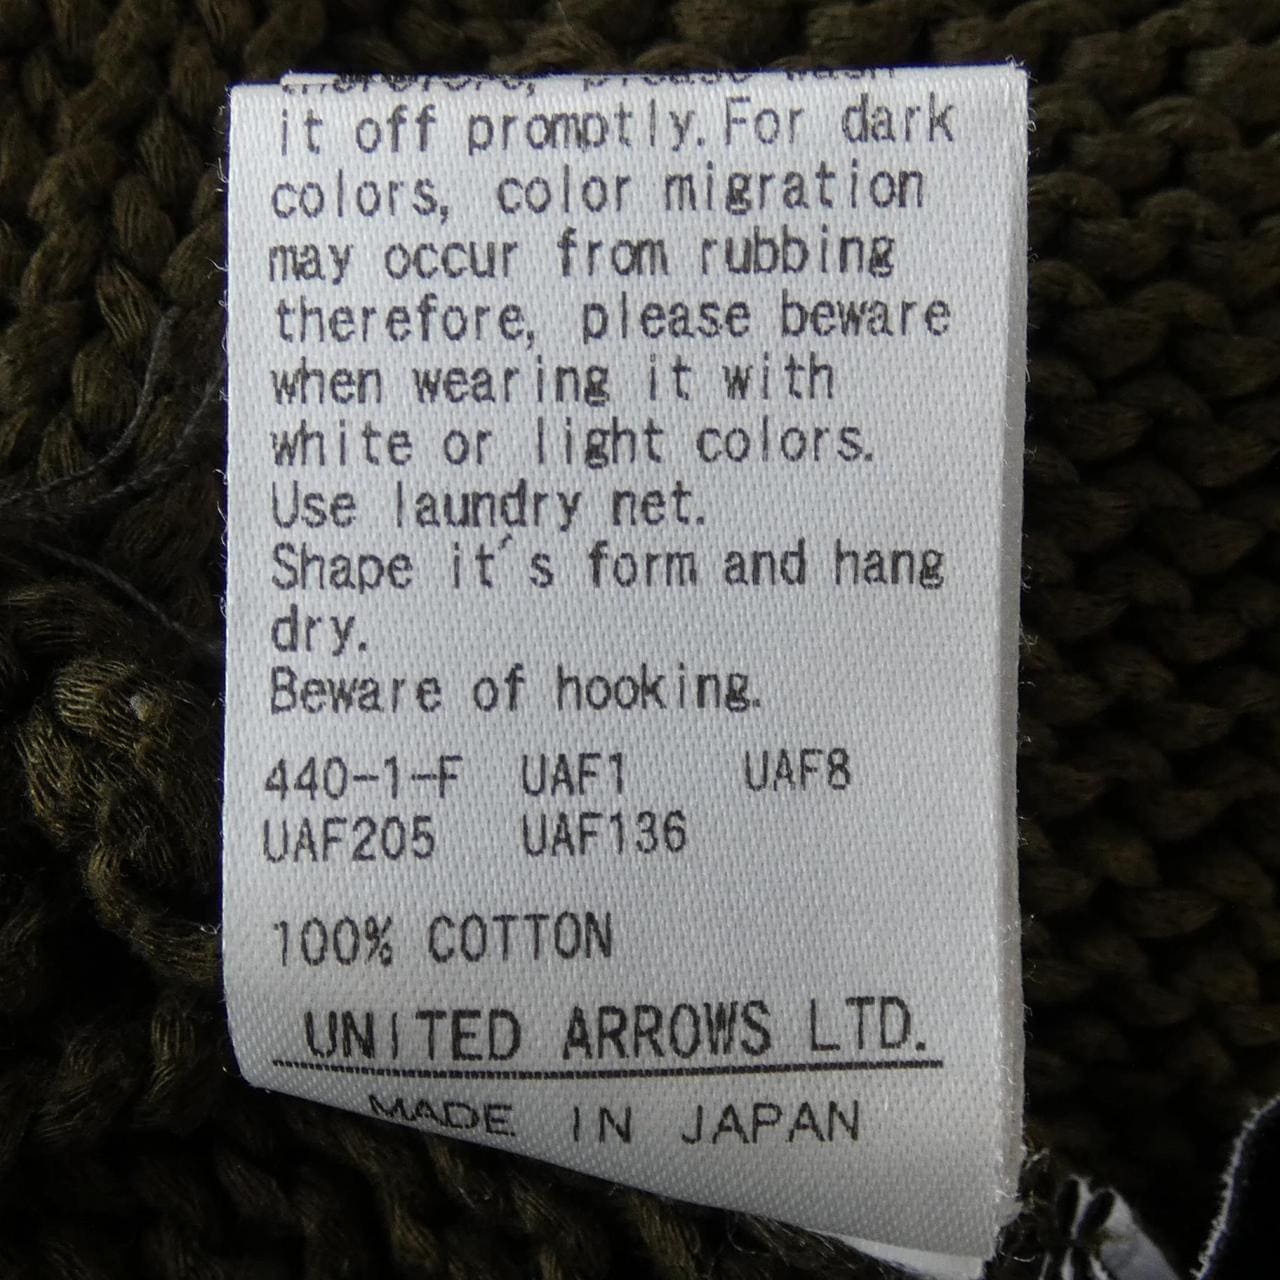 UNITED ARROWS針織衫